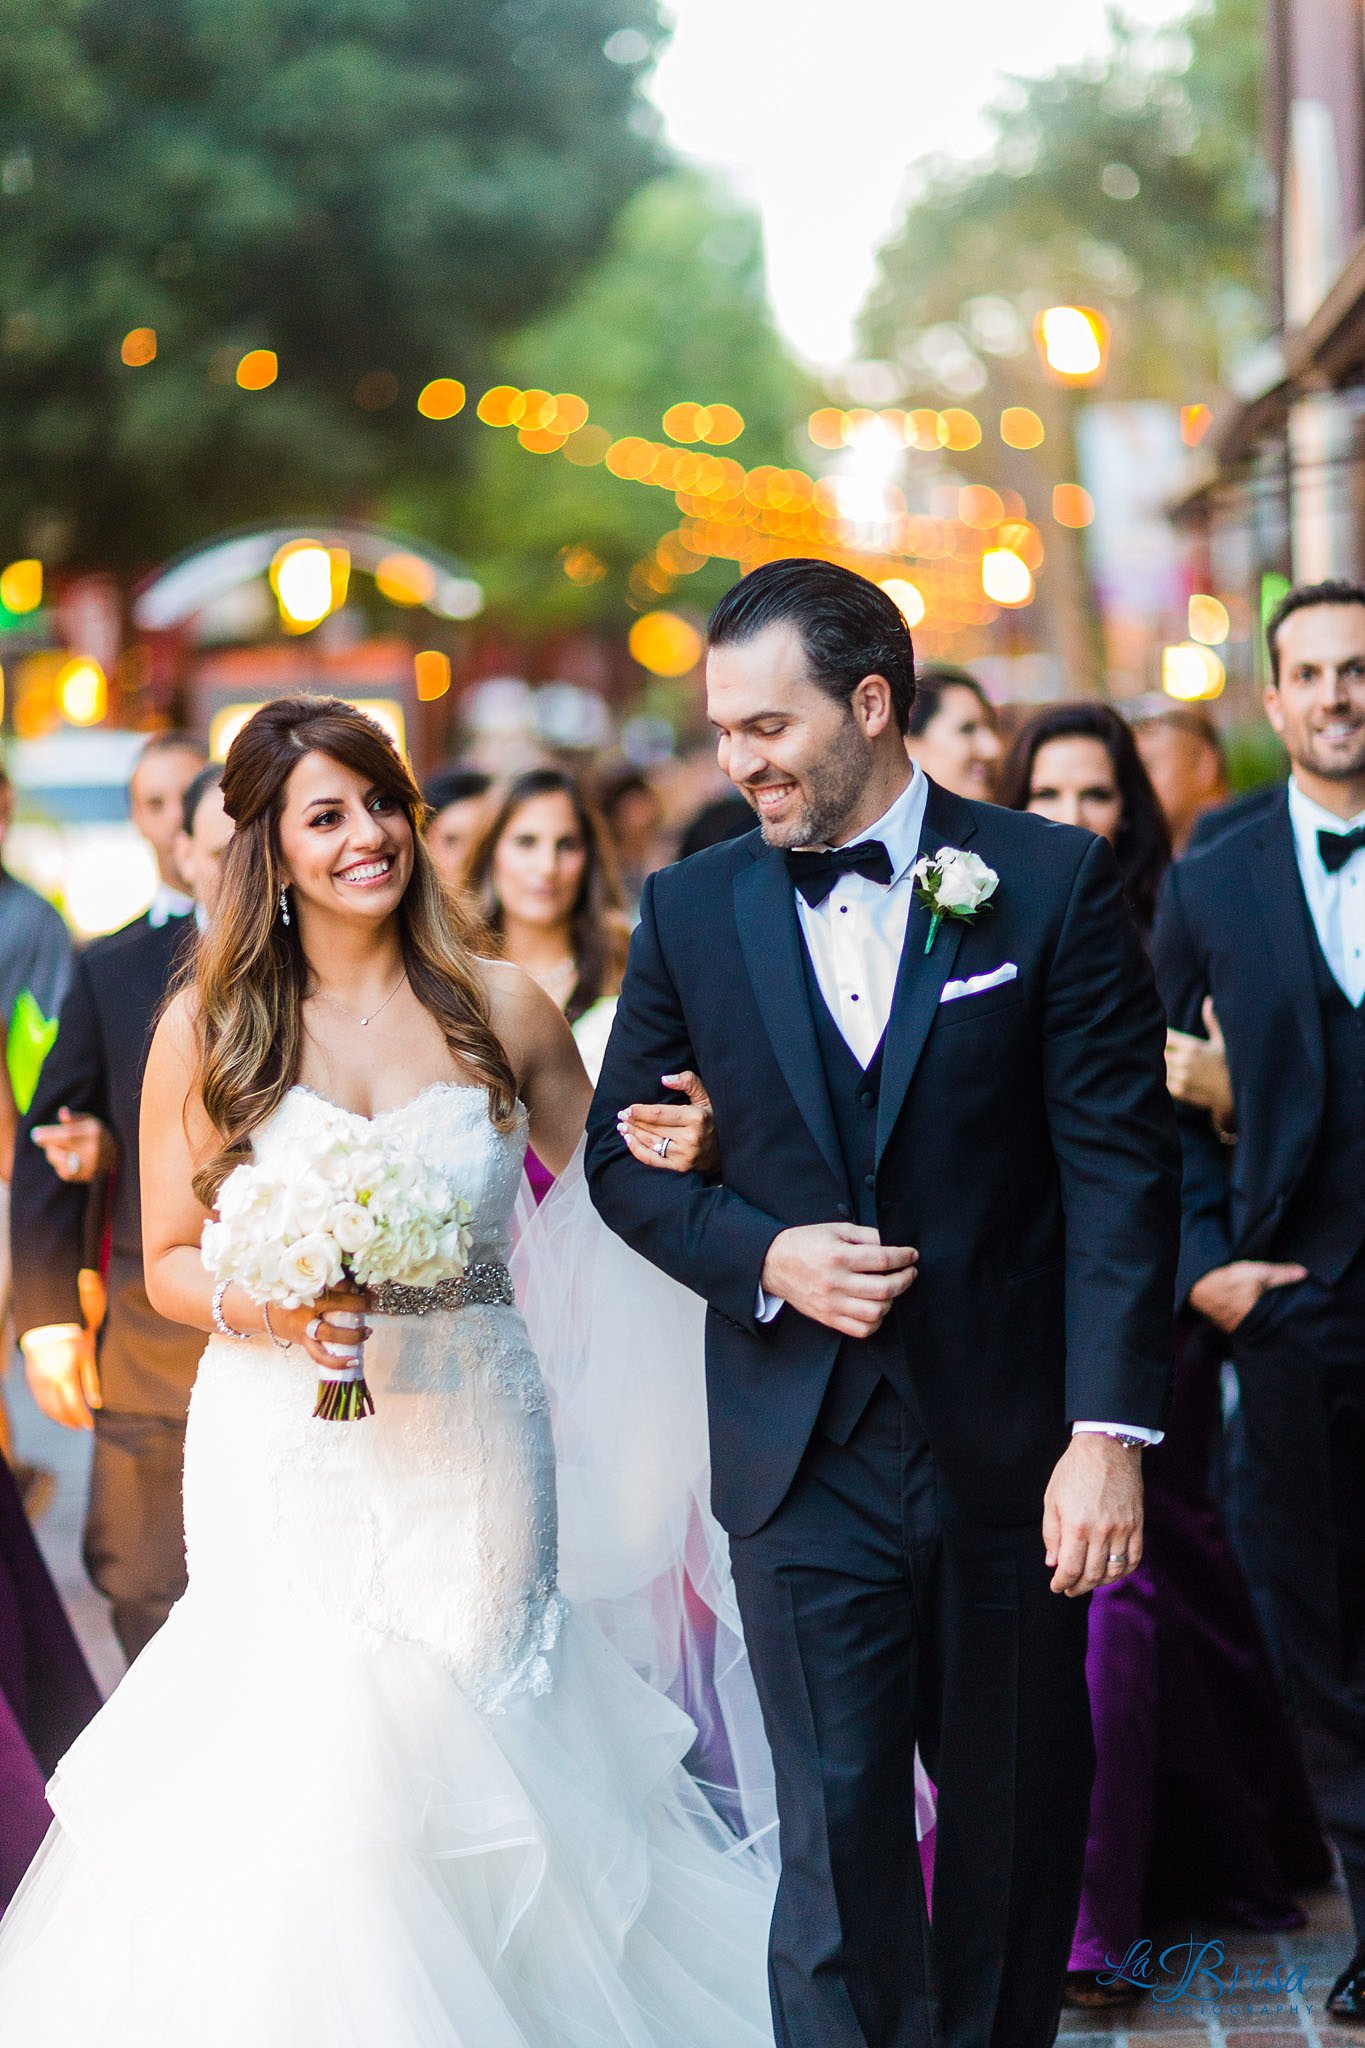 Jen & Zach | Wedding Photography Preview | San Jose, CA | Chris Hsieh